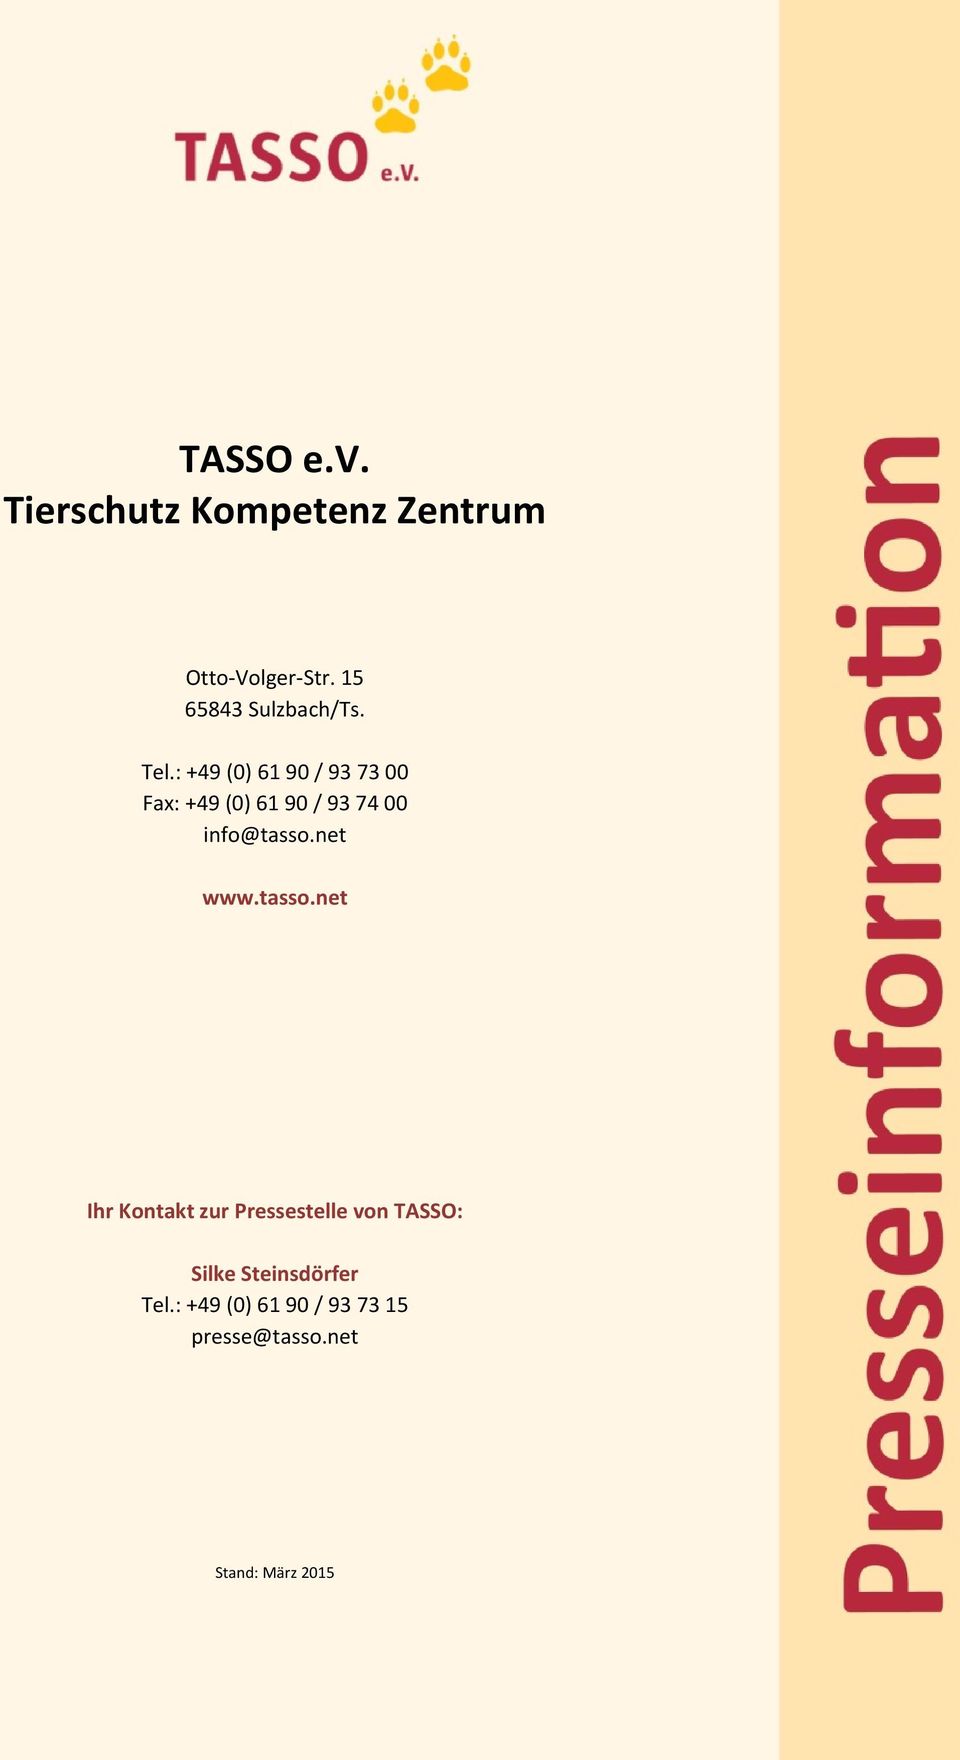 : +49 (0) 61 90 / 93 73 00 Fax: +49 (0) 61 90 / 93 74 00 info@tasso.